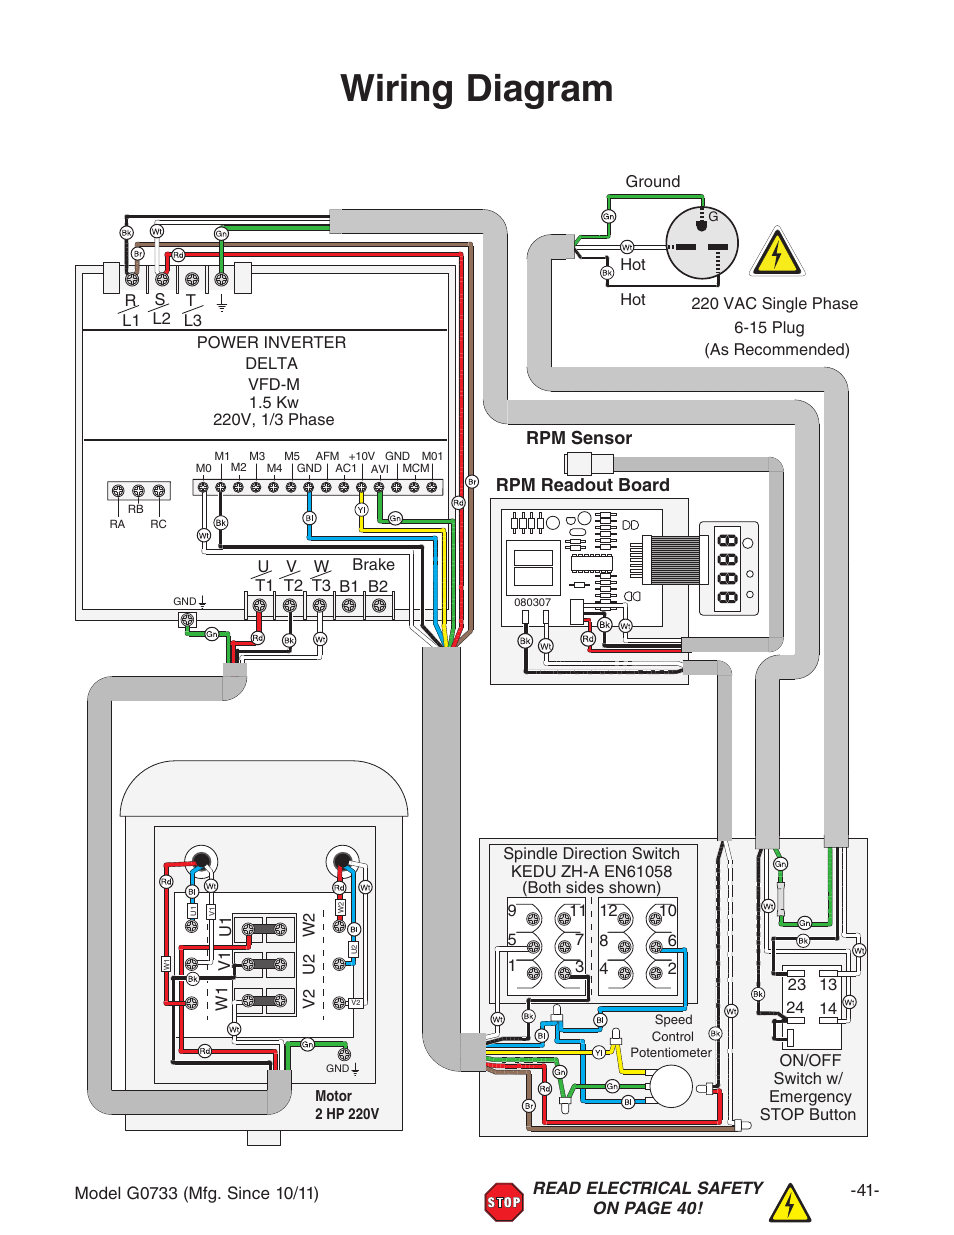 9 Wire Motor Wiring Diagram from www.manualsdir.com